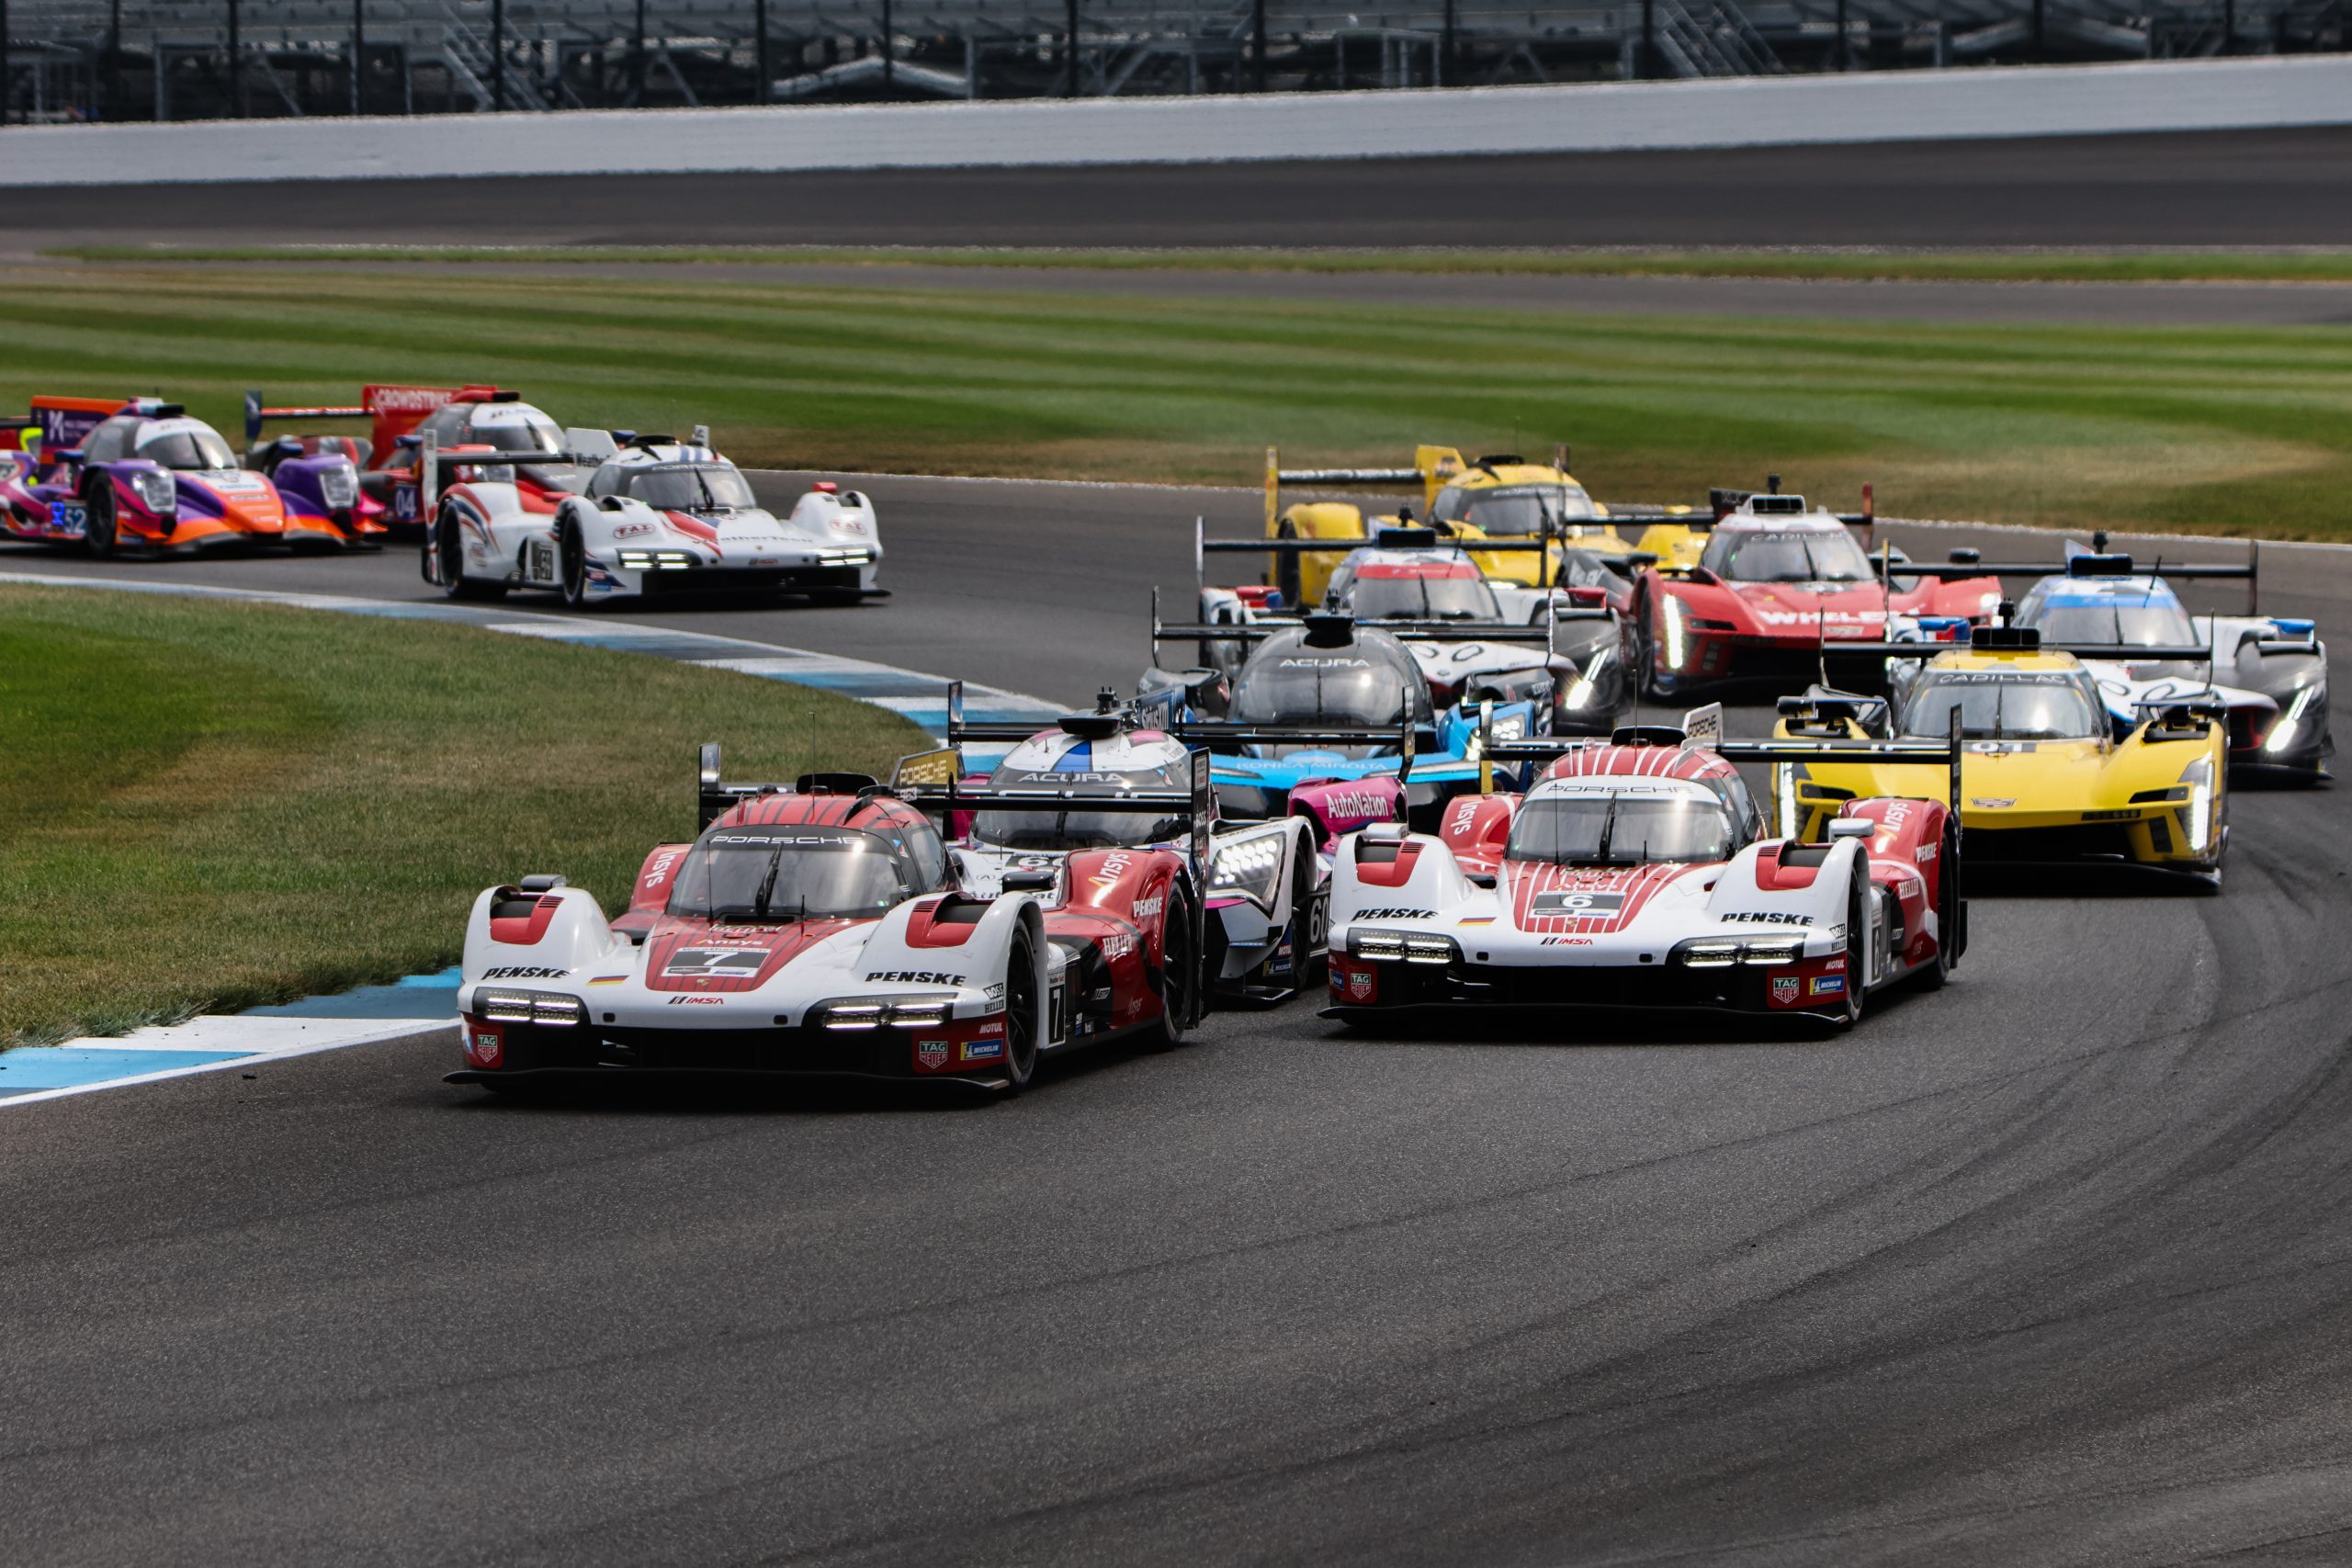 Penske Porsches domitated the return to Indy Photo: Wayne Riegle